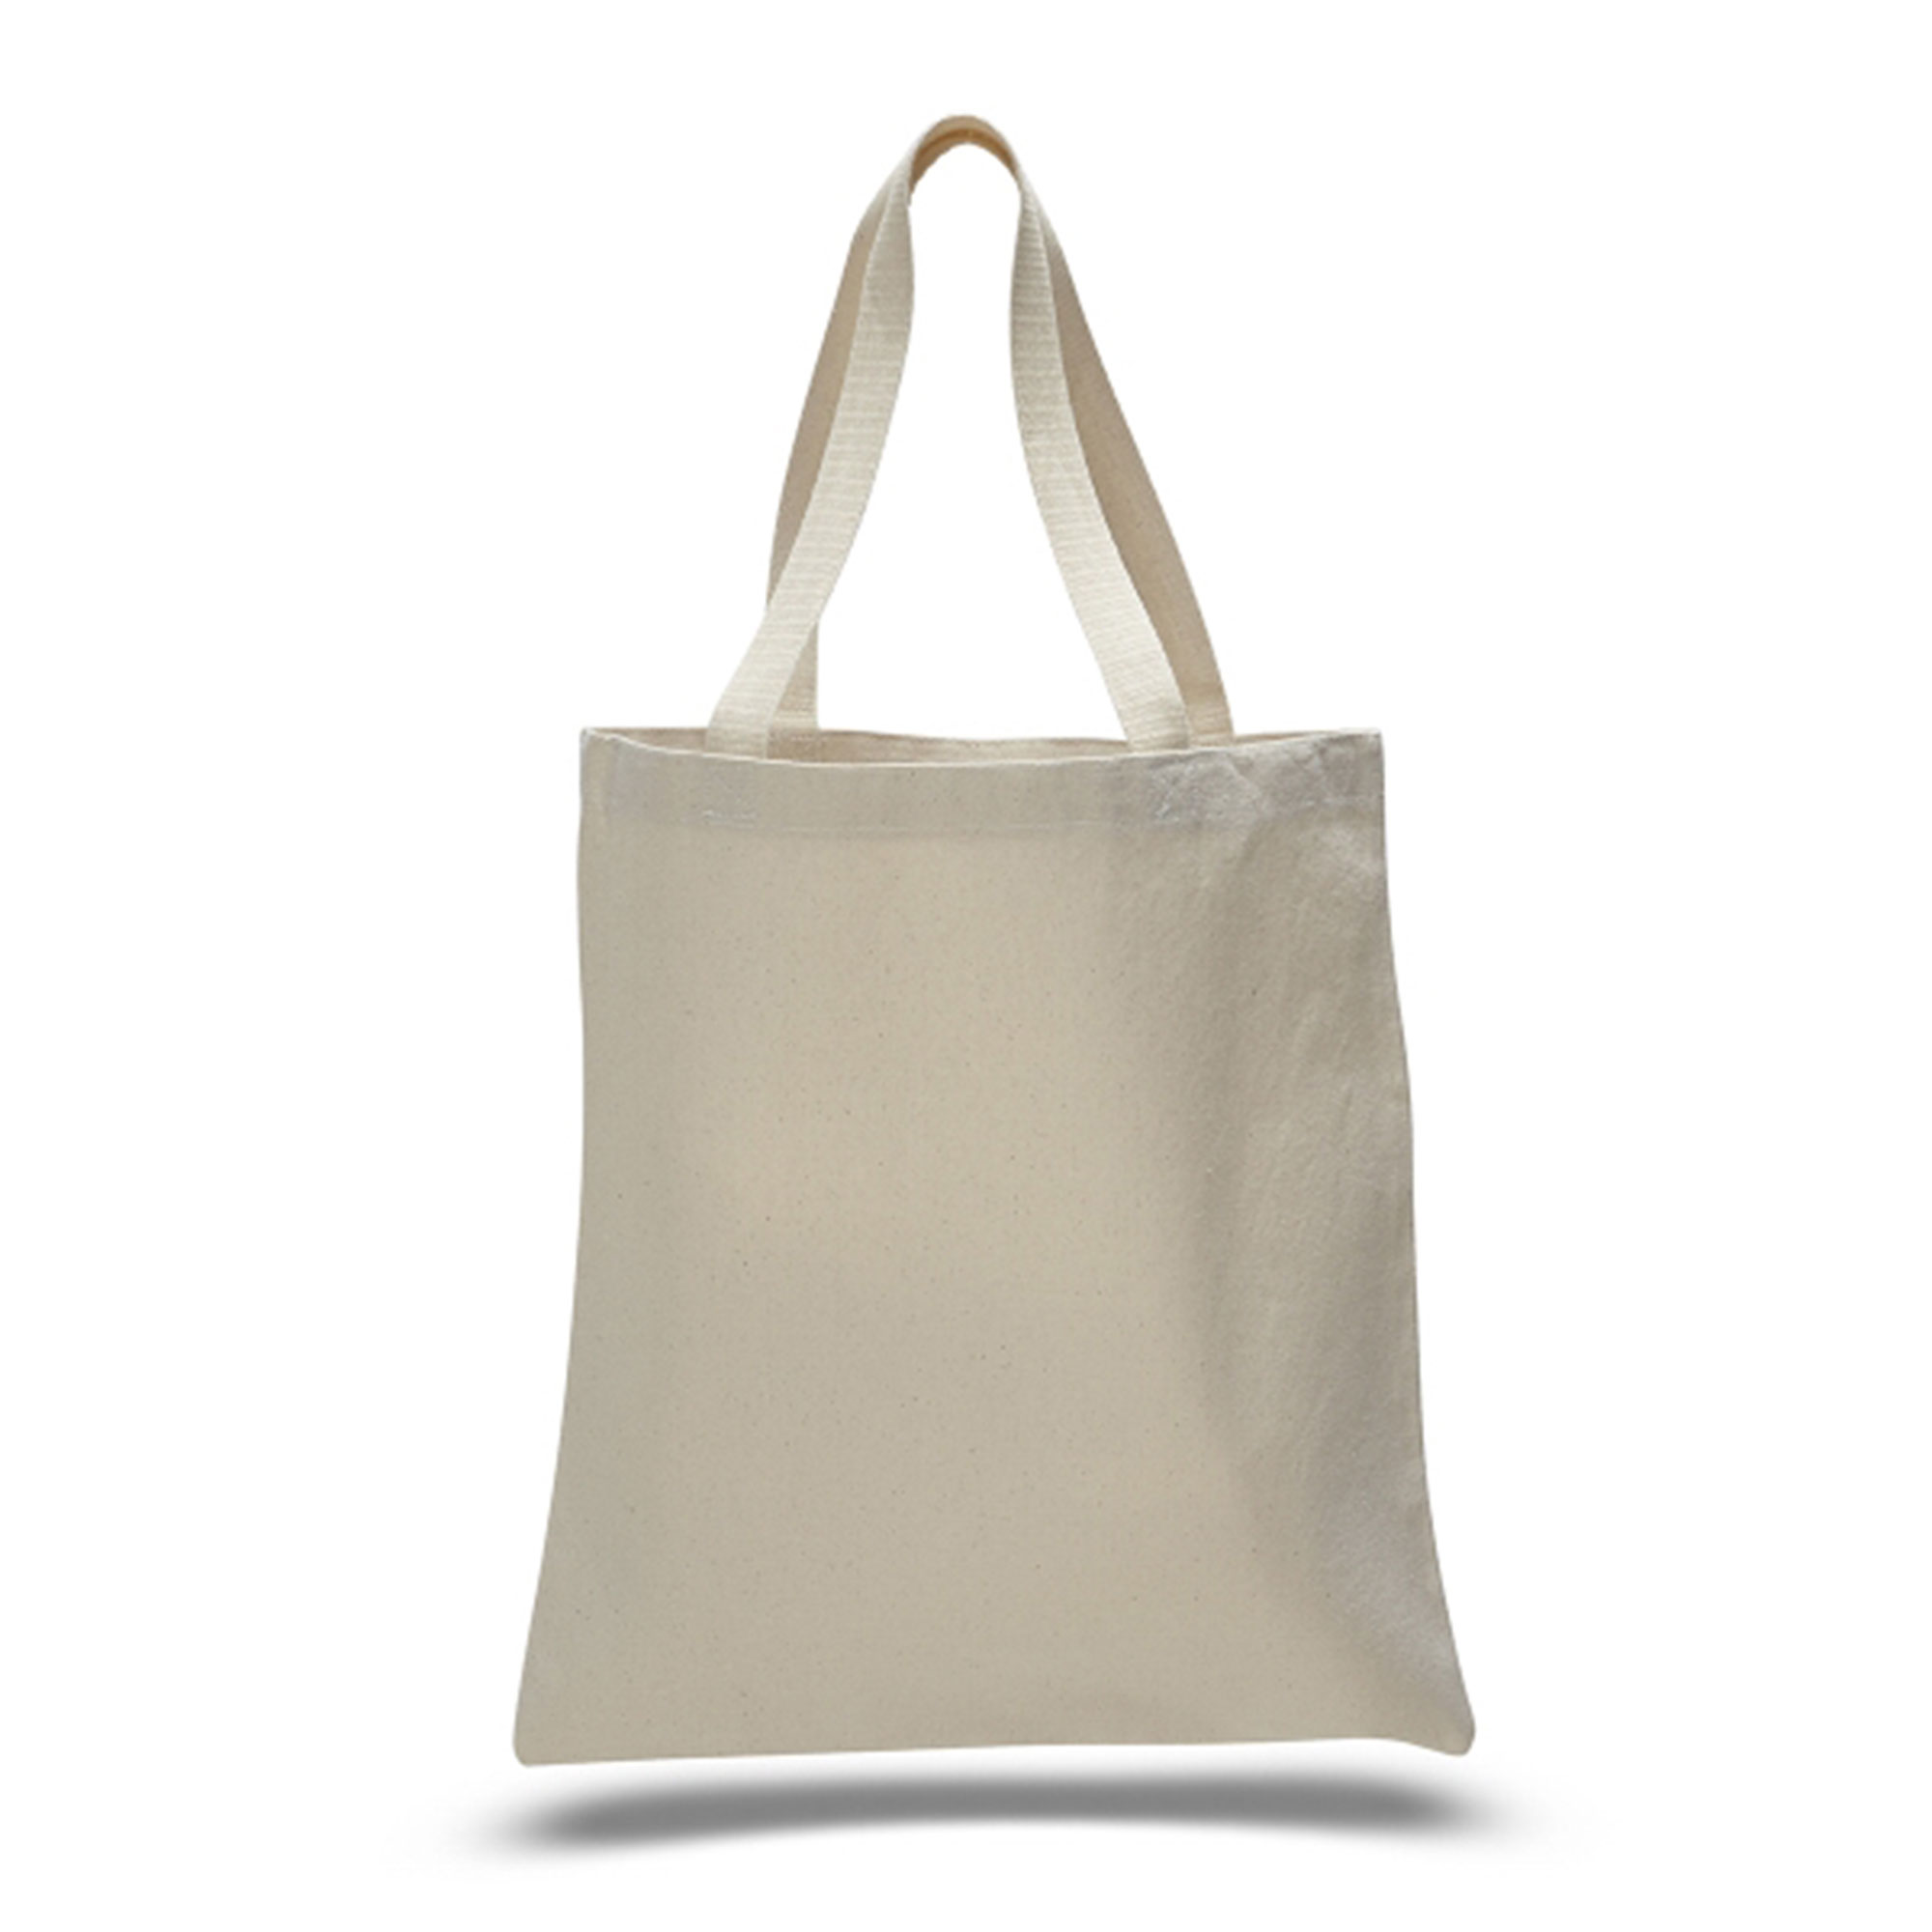 OAD® OAD113 12 oz Cotton Canvas Tote Bag